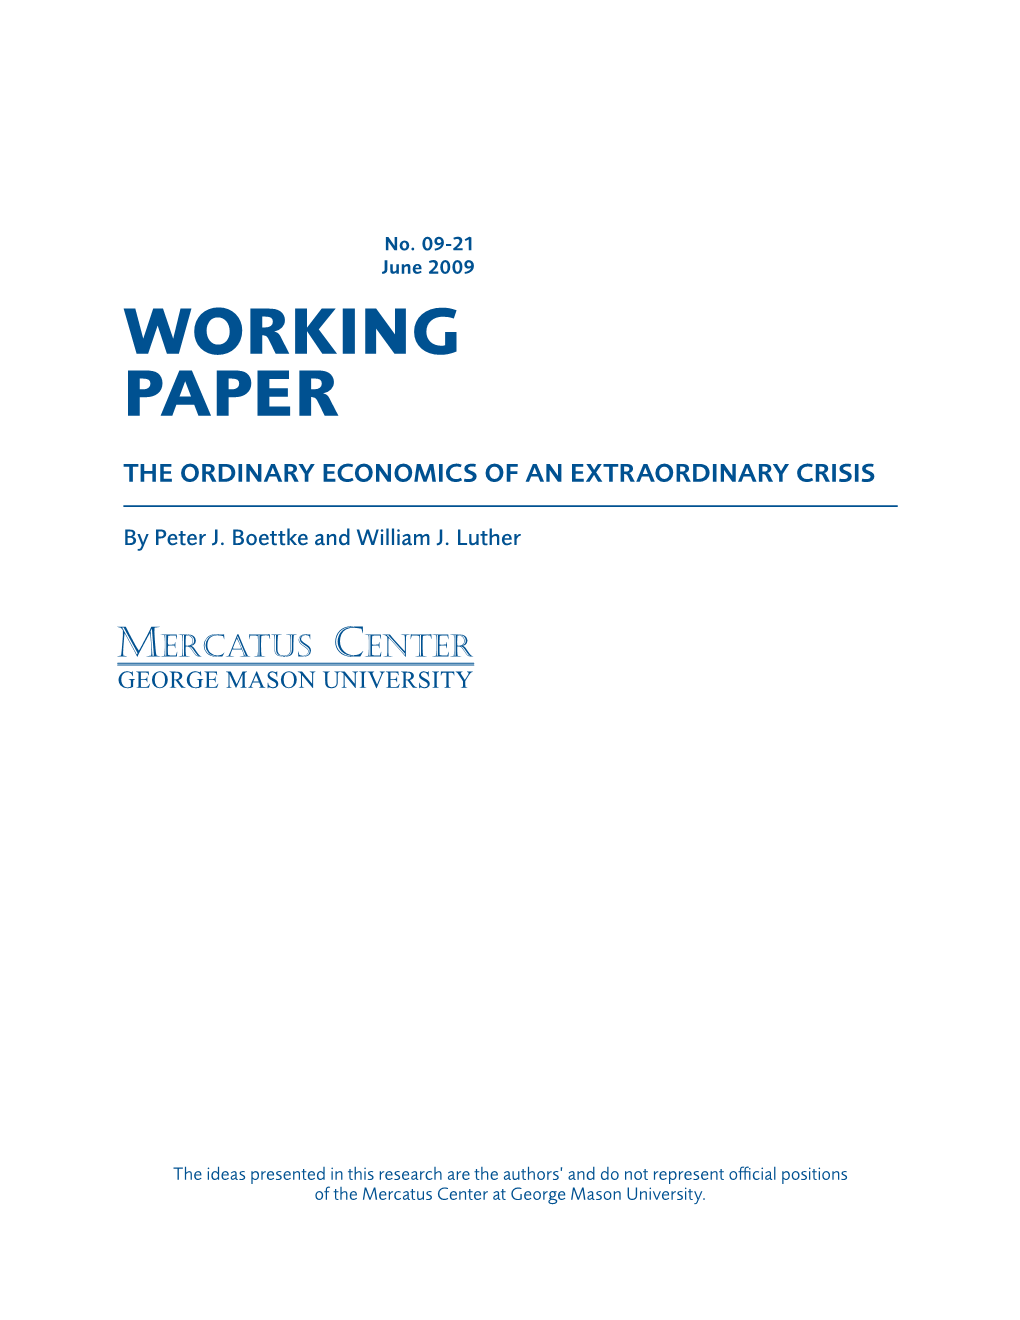 The Ordinary Economics of an Extraordinary Crisis